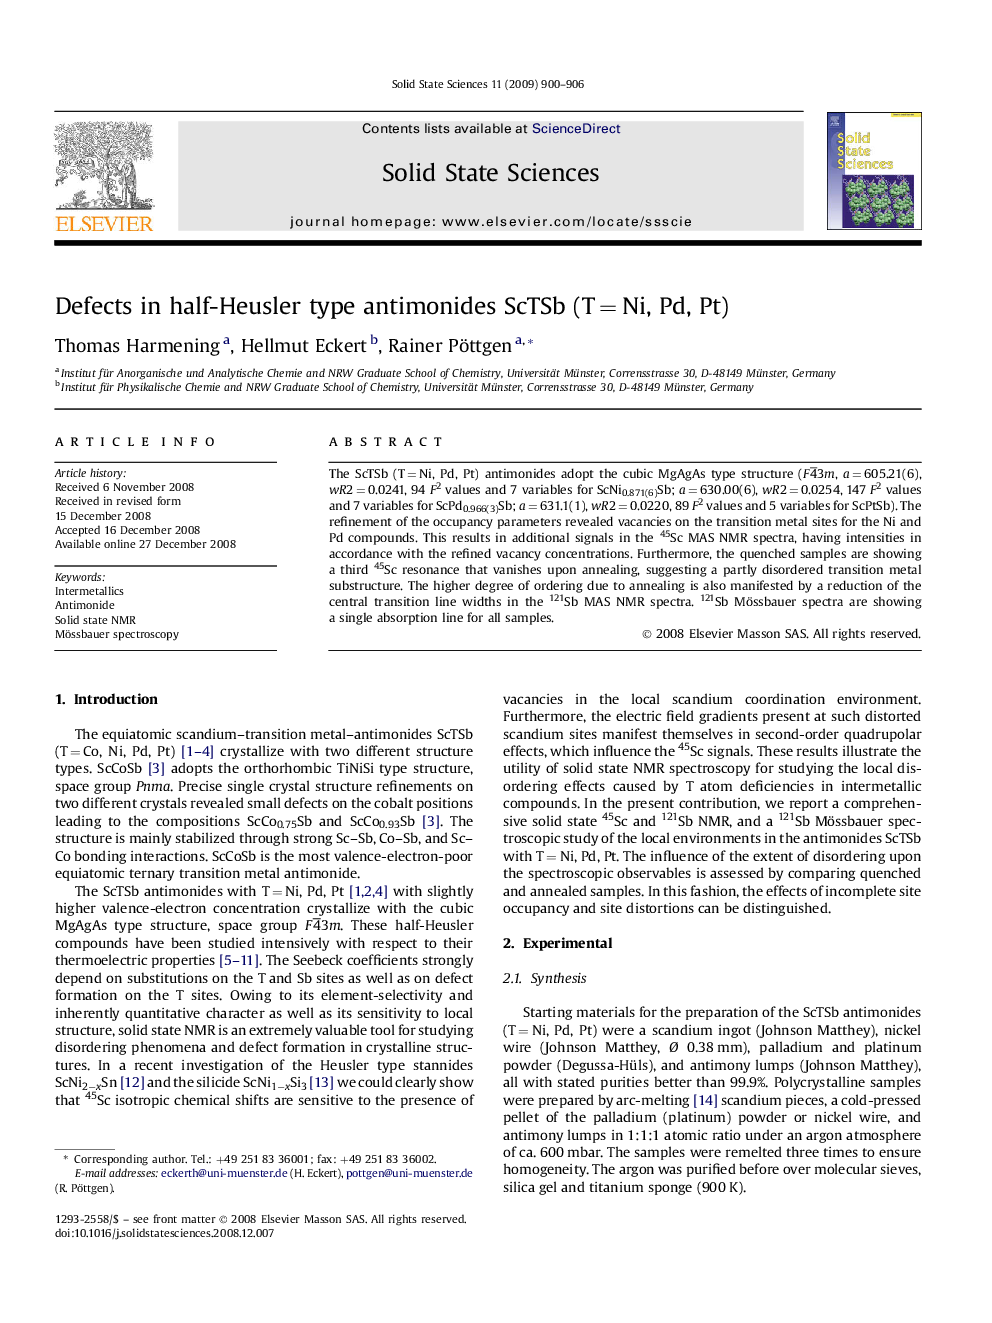 Defects in half-Heusler type antimonides ScTSb (T = Ni, Pd, Pt)